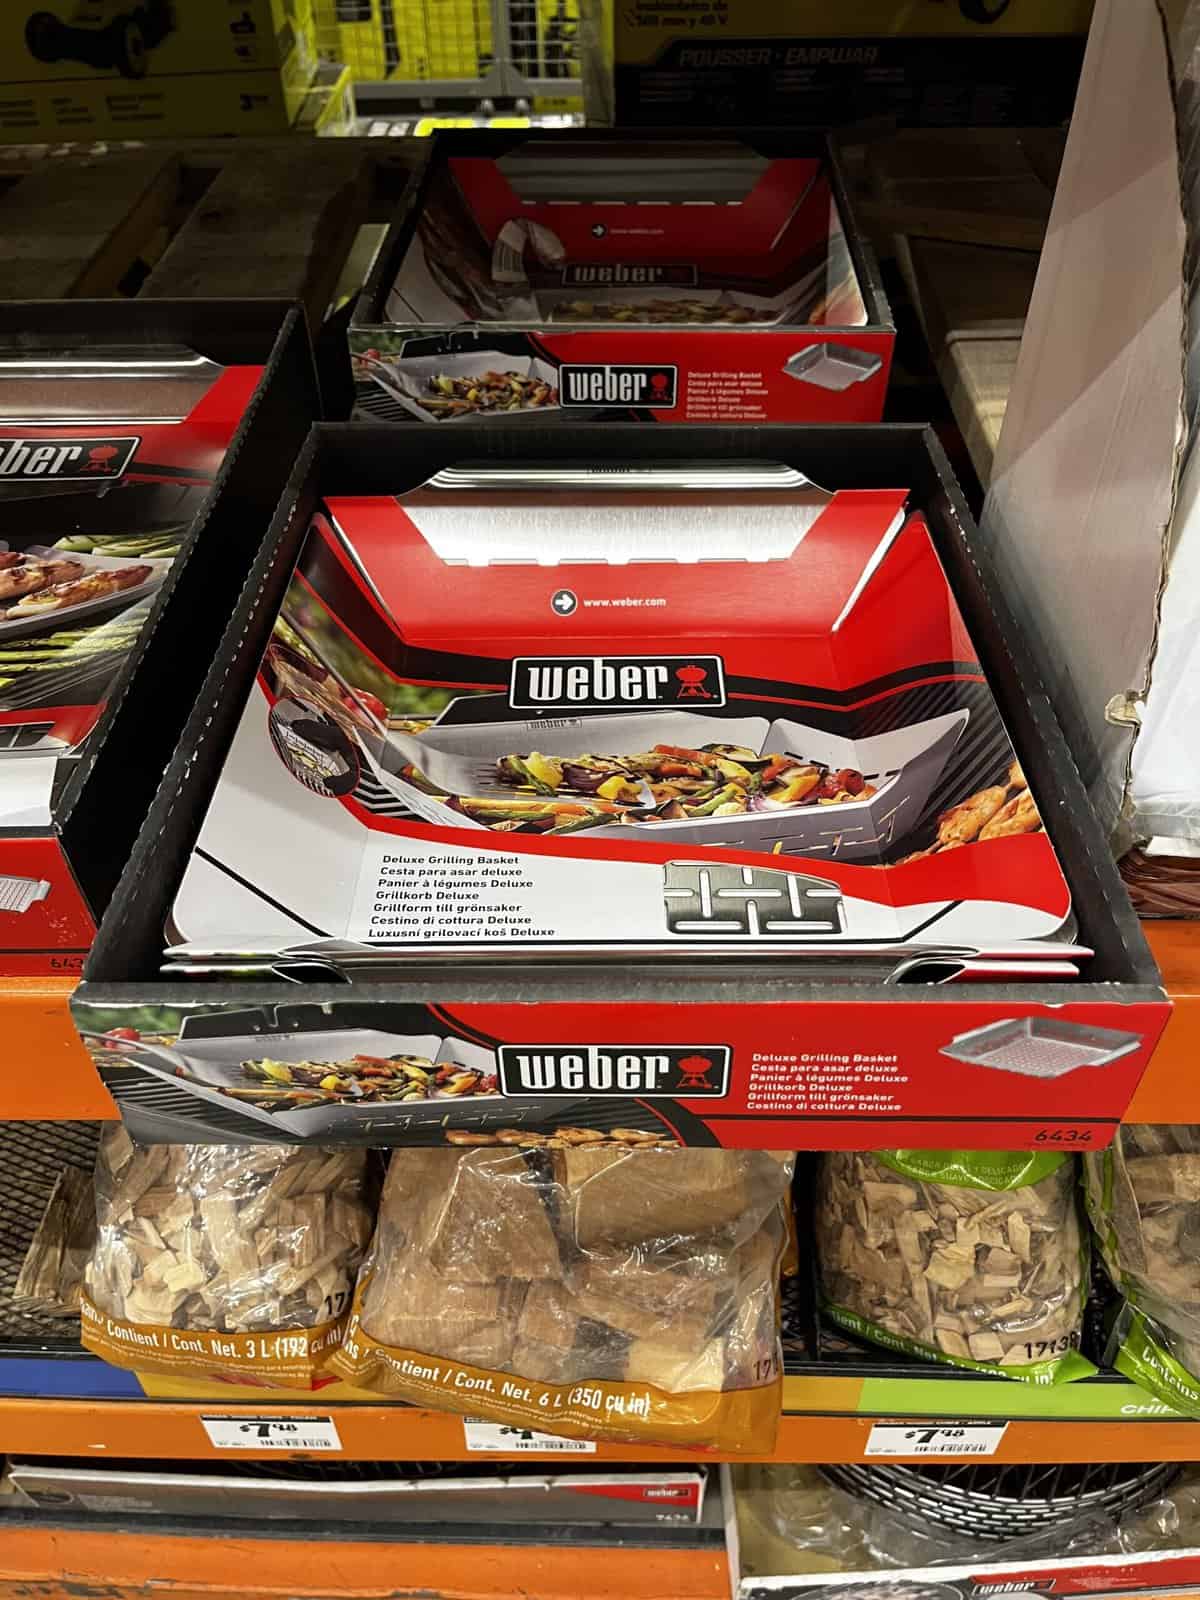 weber grill basket in packaging on display